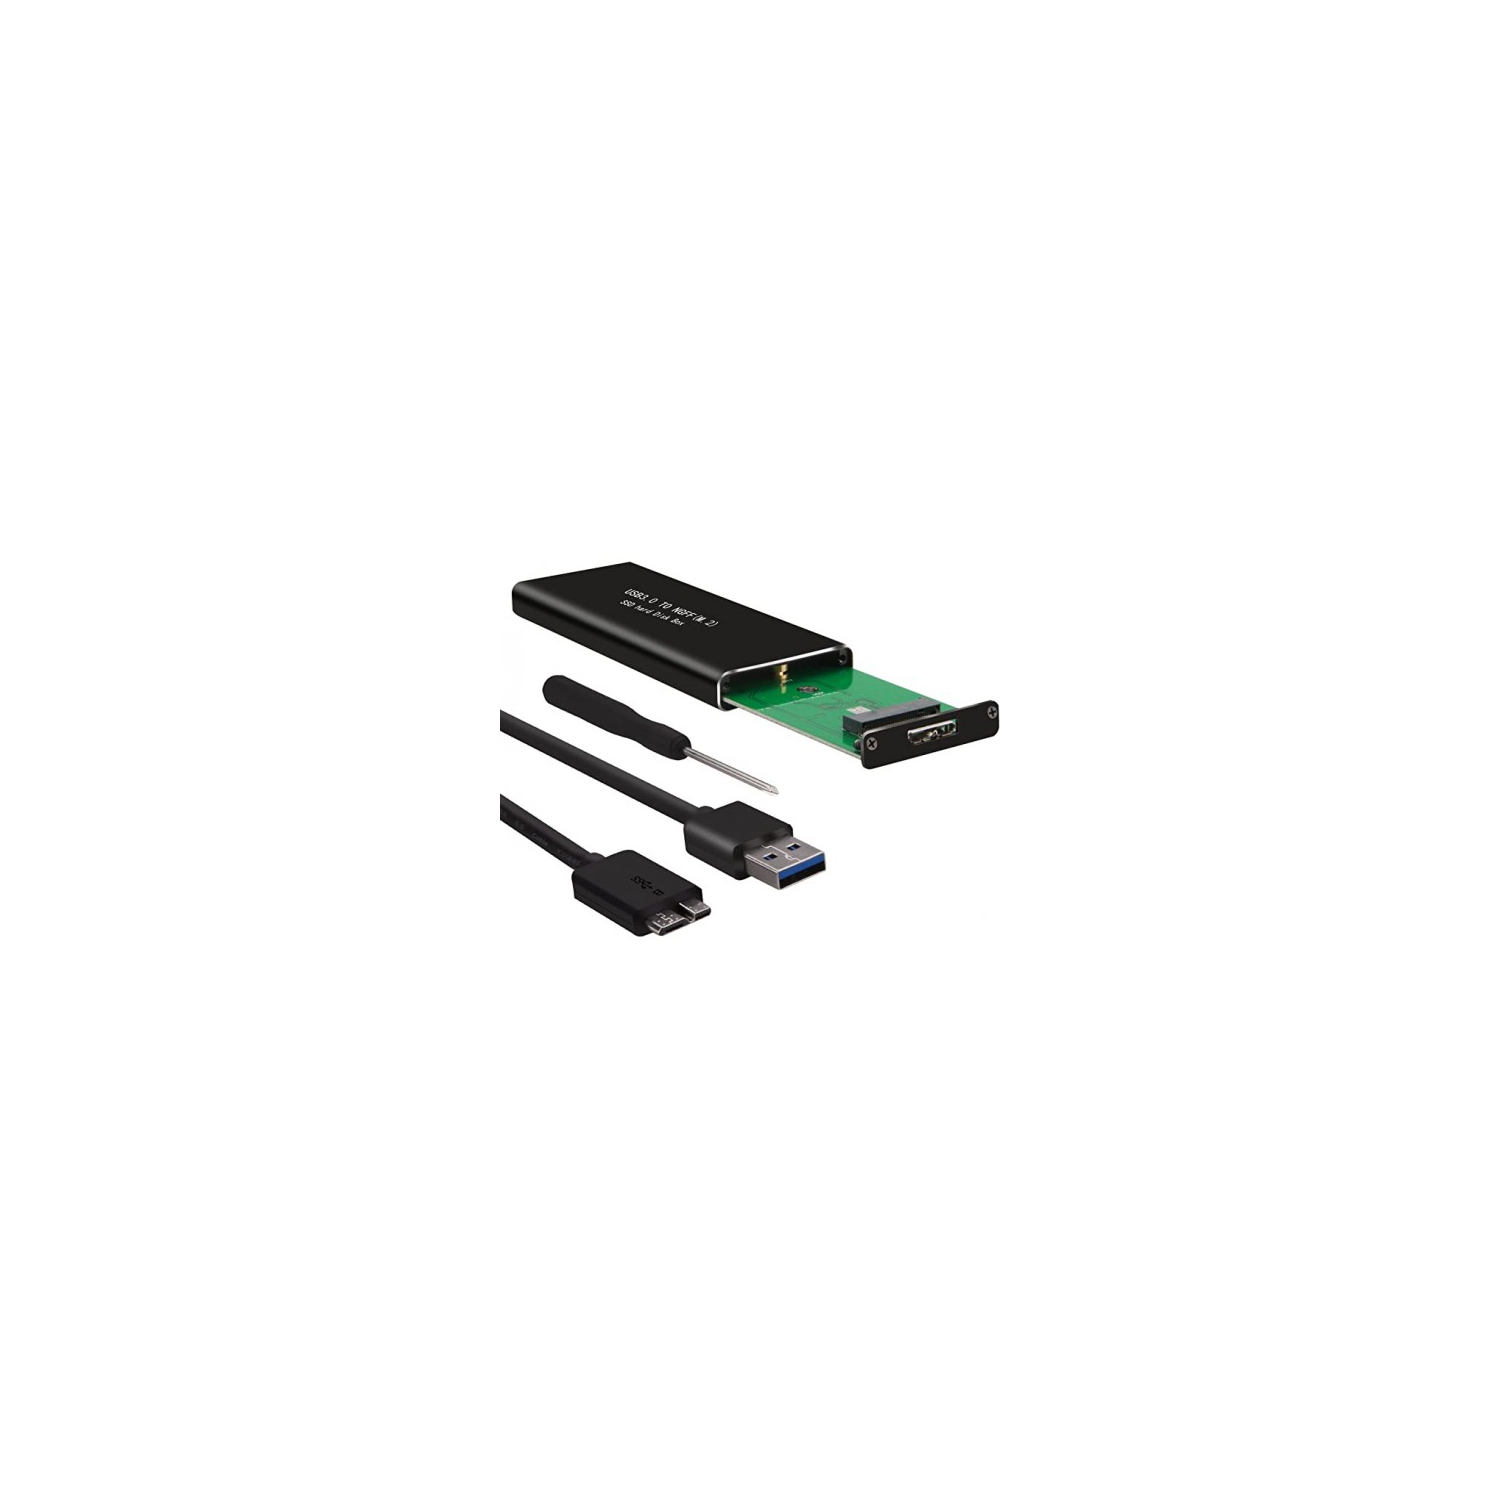 PCI-e NGFF M.2 SSD 2280 to USB 3.0 External Enclosure Storage Case Adapter Aluminum